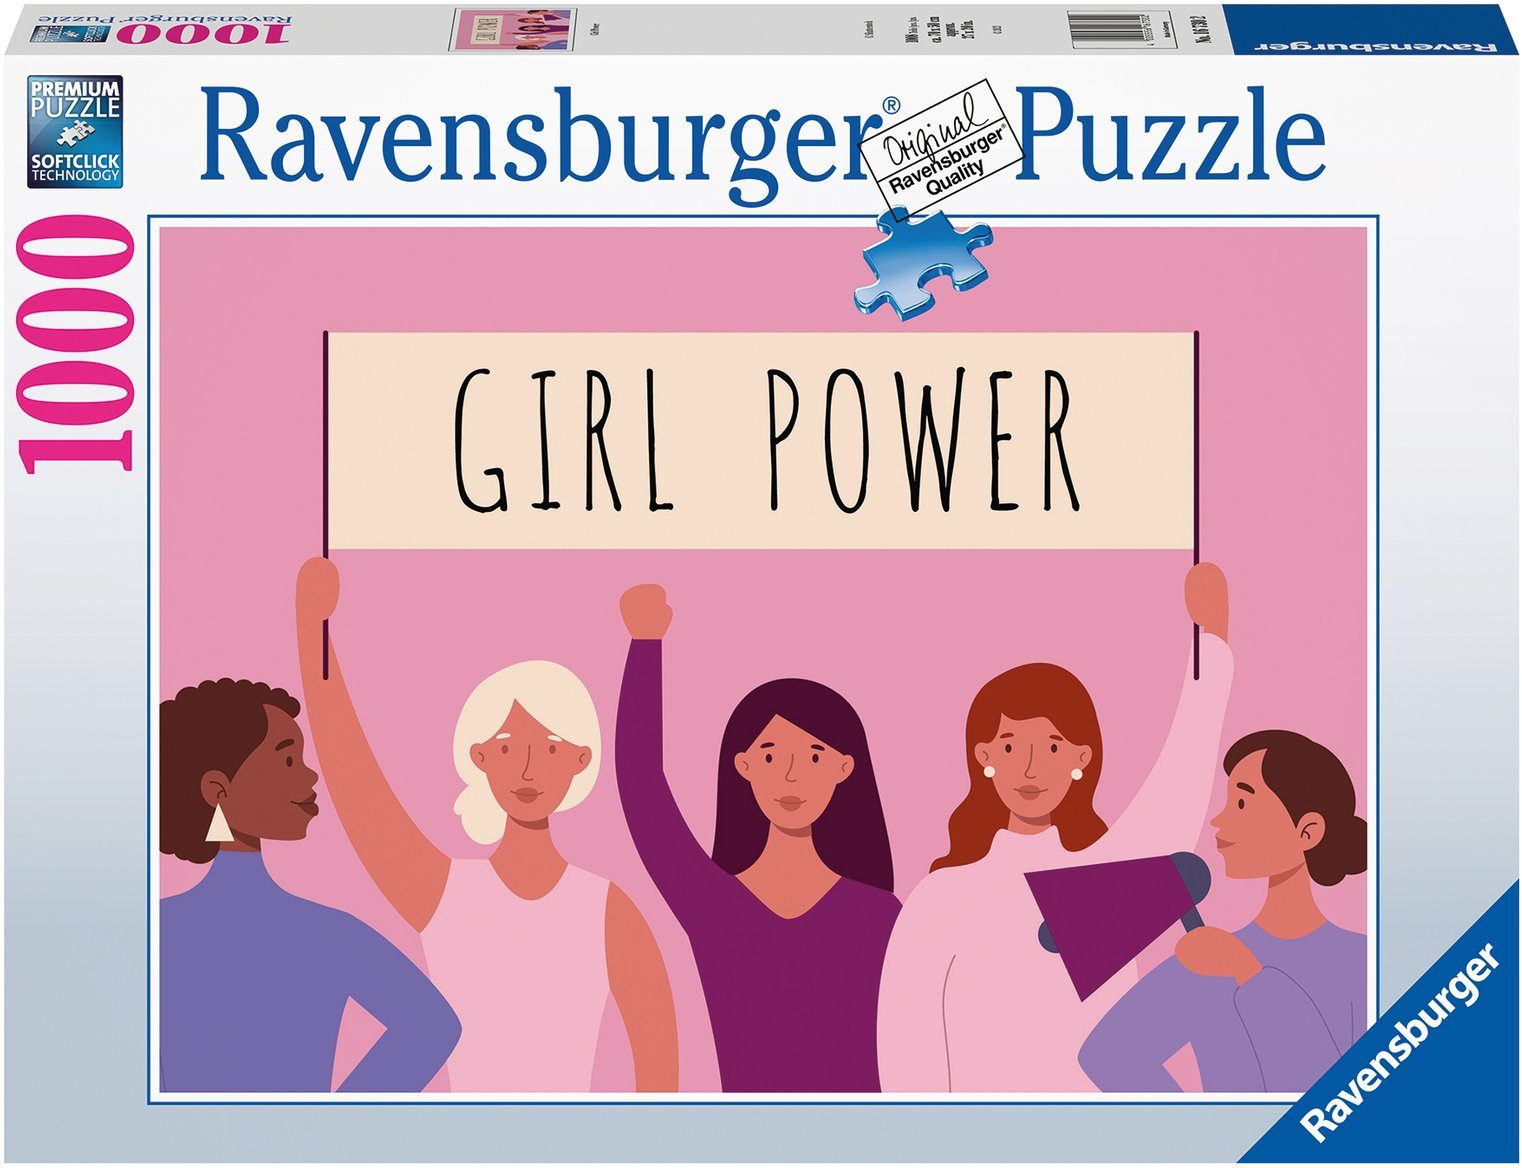 Ravensburger Puzzle Girl Power, 1000 Puzzleteile, Made in Germany, FSC® - schützt Wald - weltweit | Puzzle